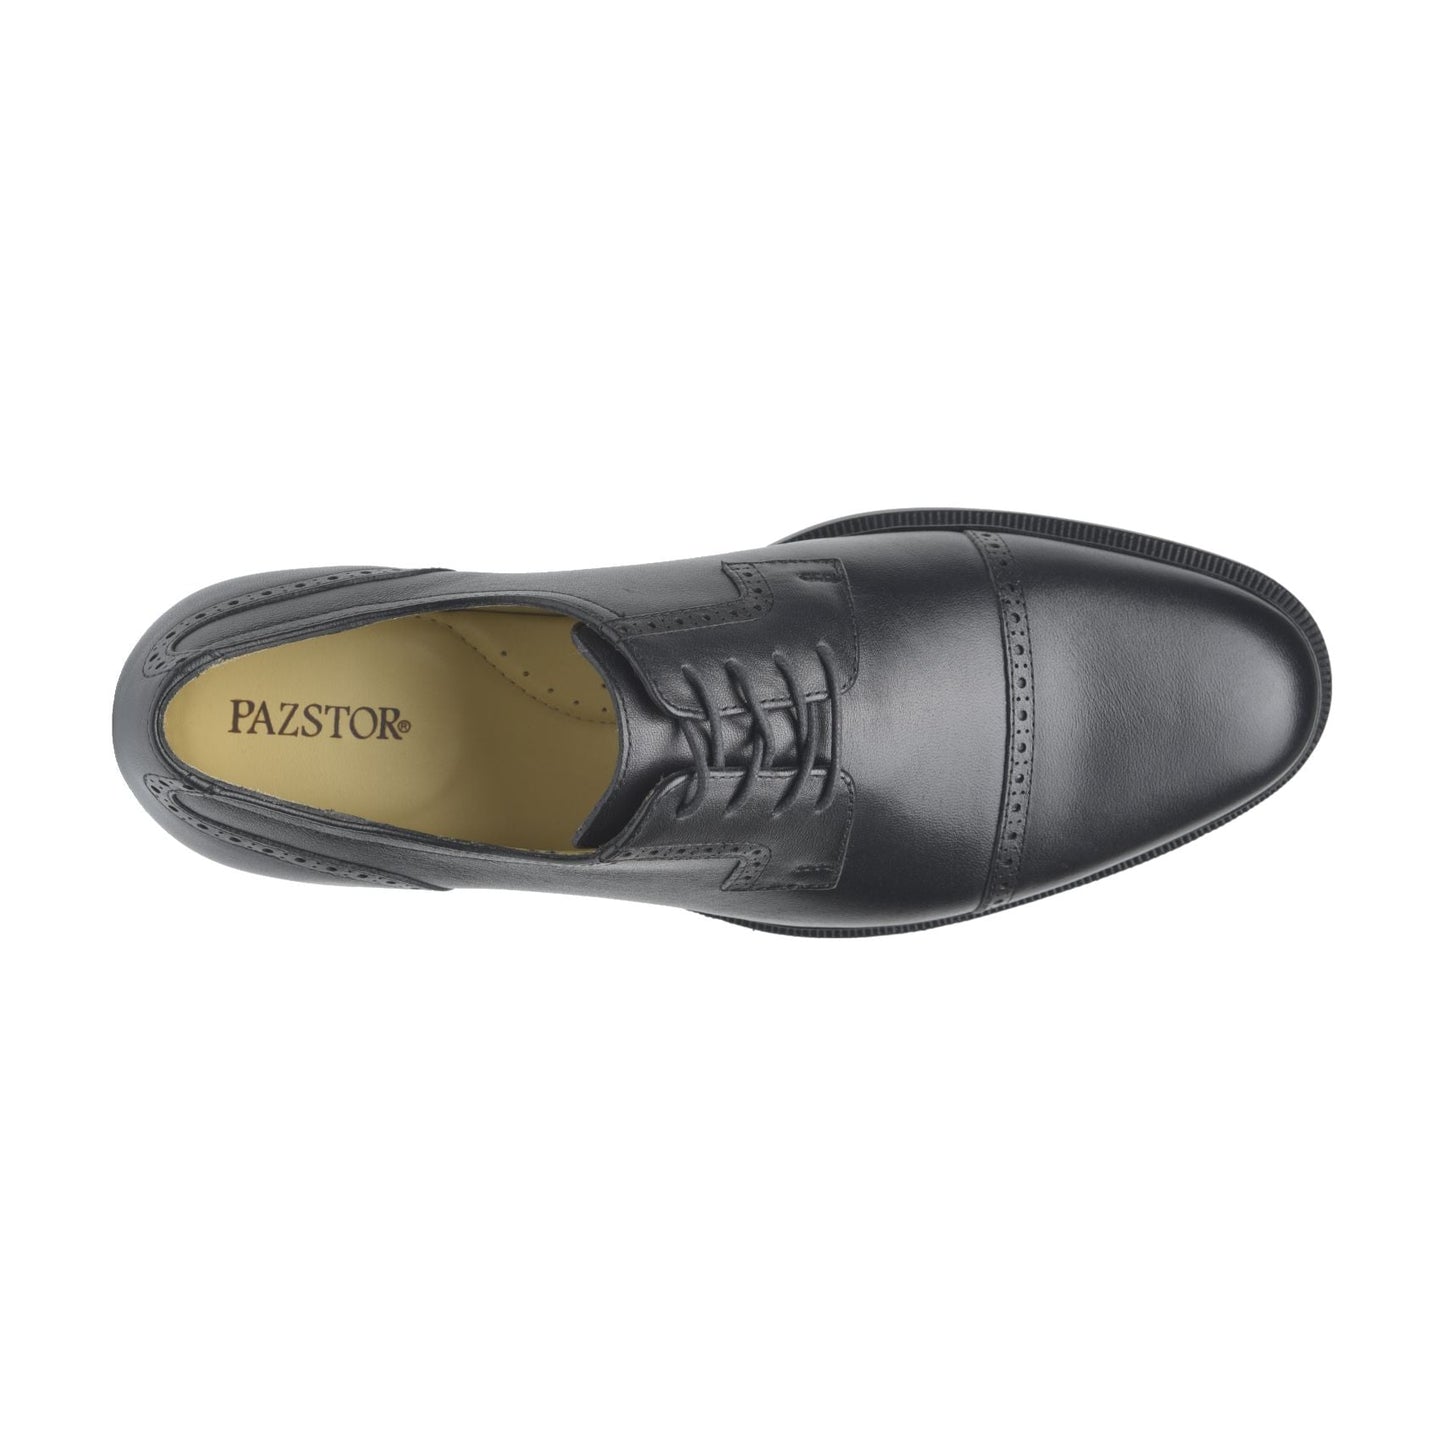 Premium comfort lambskin leather oxfords mens shoes